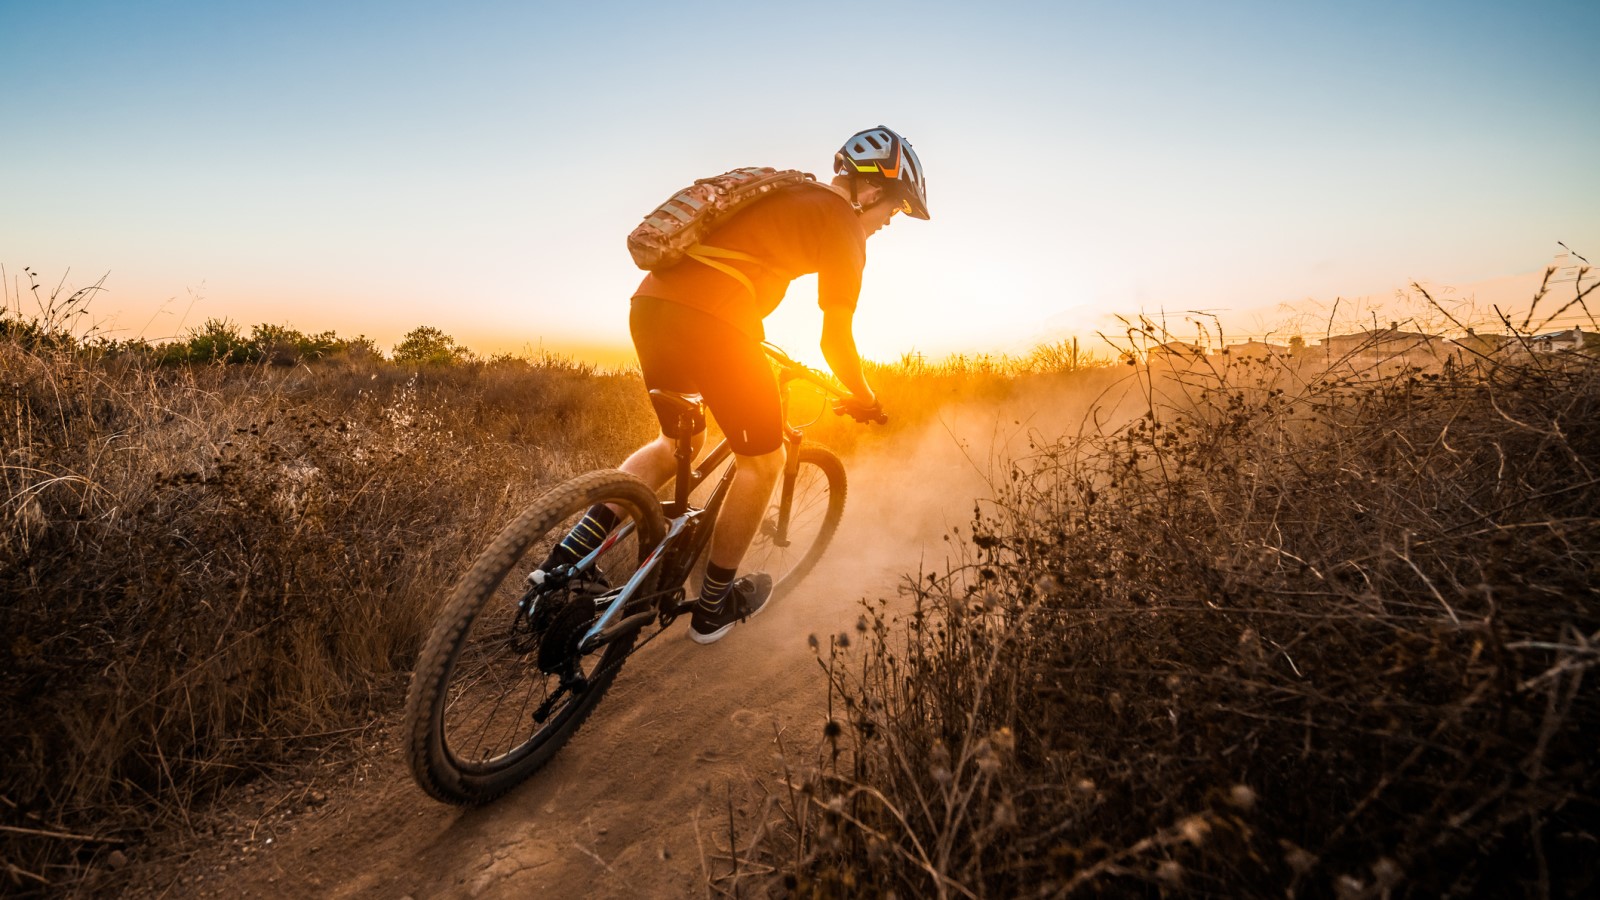 Mountain bike rider on coastal sand dunes at sunset.